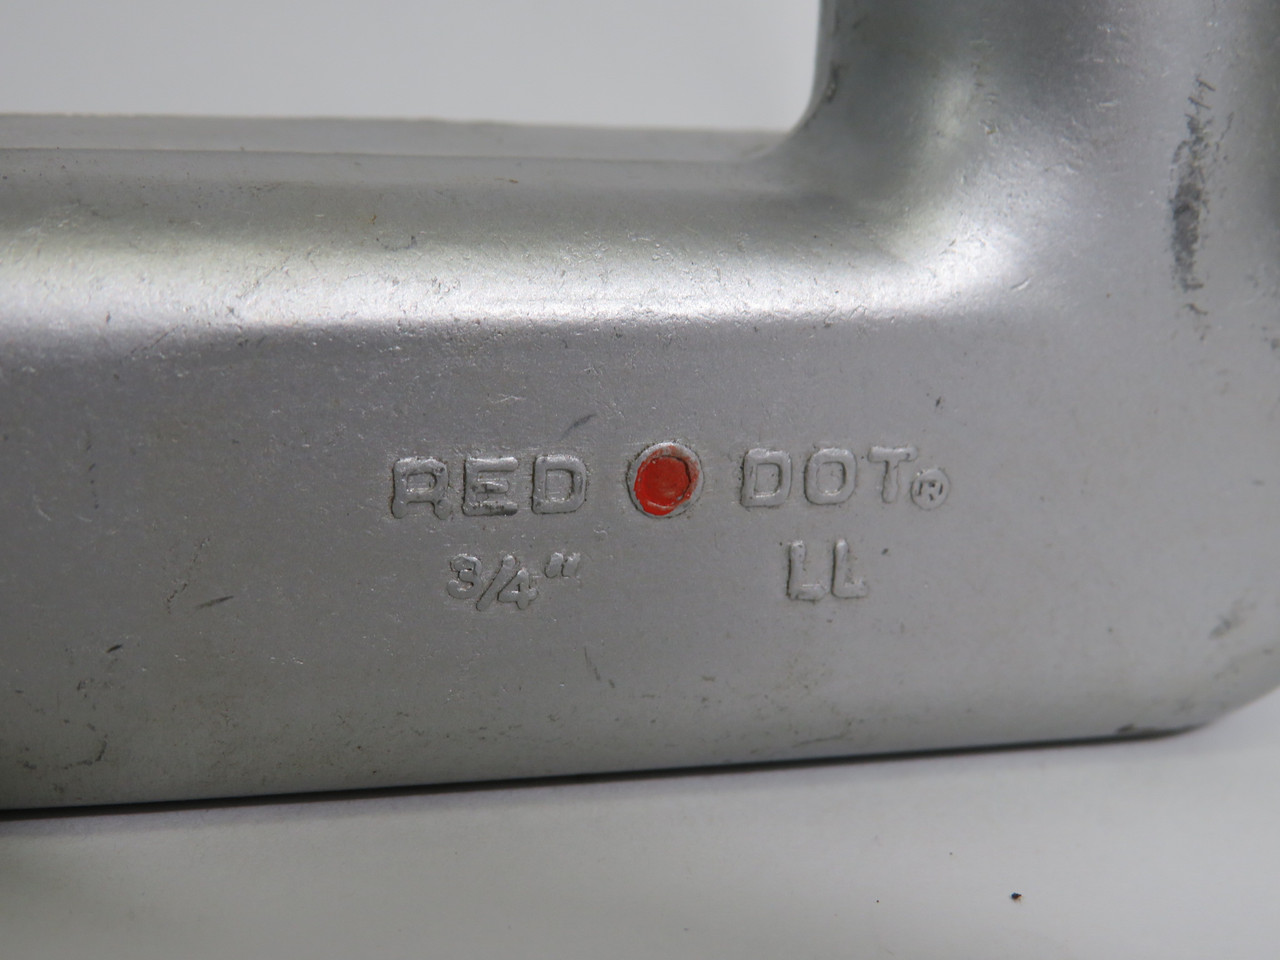 Thomas & Betts DALL-2-CG Red Dot 3/4" Conduit USED